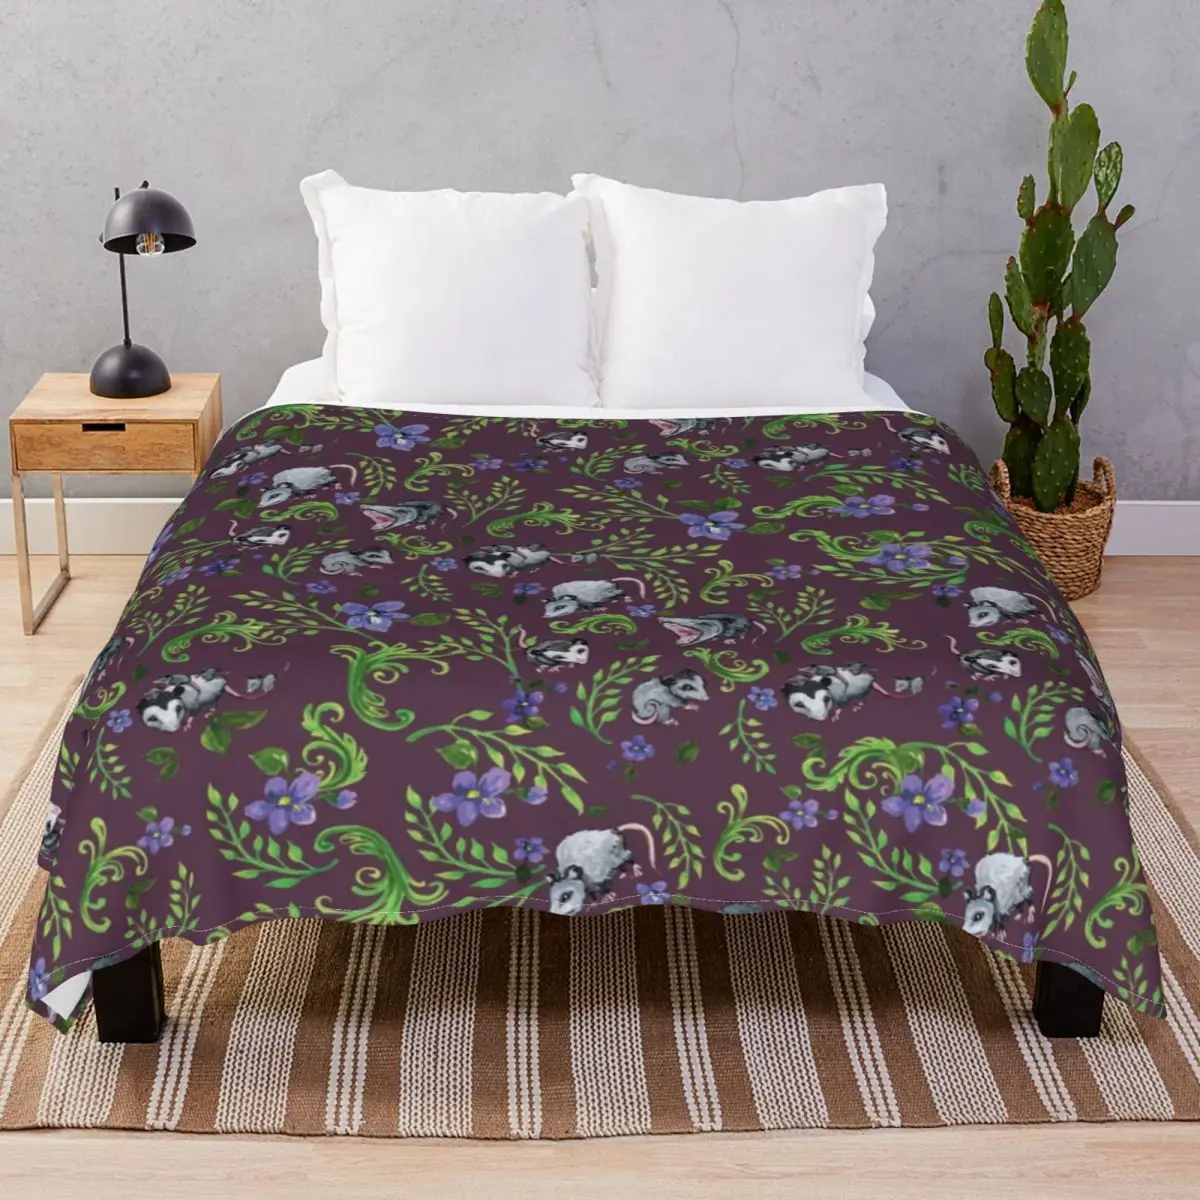 Opossum Fern Violet Print Blanket Coral Fleece Summer Super Warm Throw Blankets for Bed Home Couch Camp Cinema